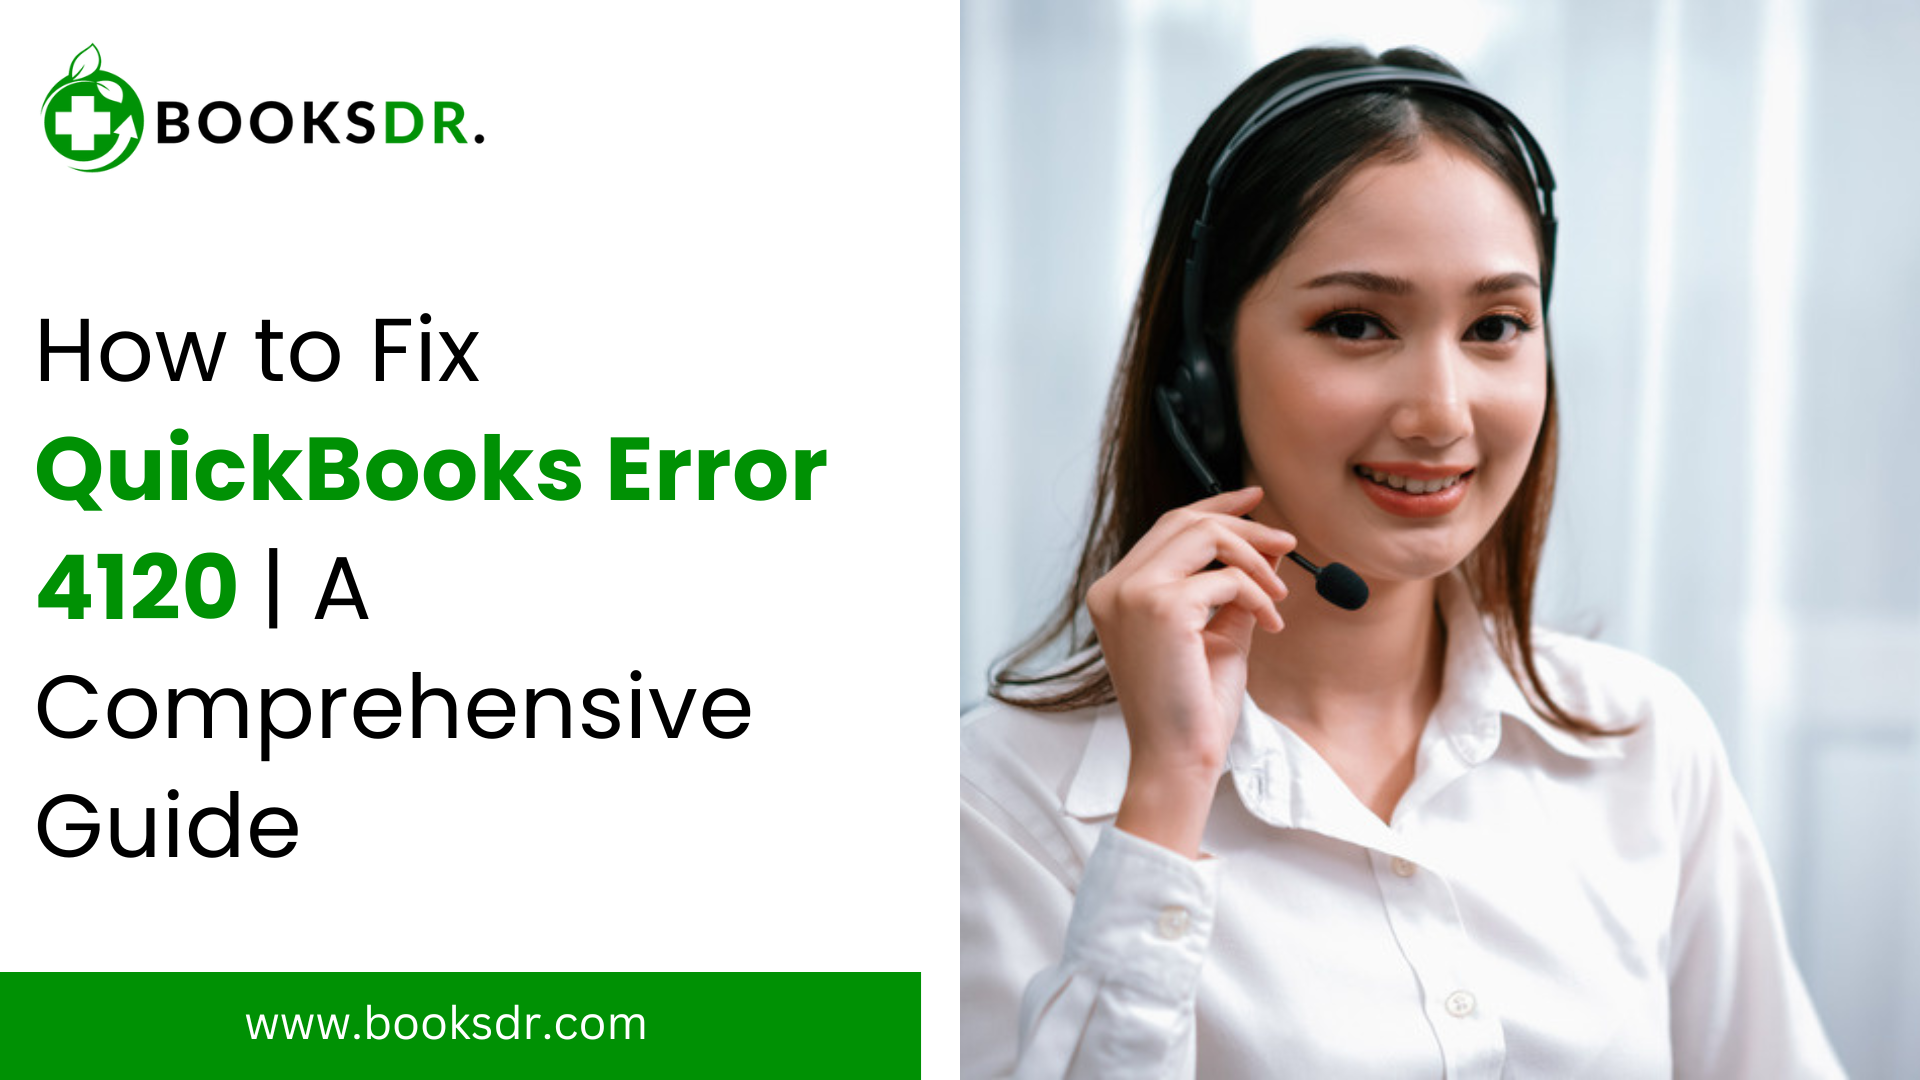 How to Fix QuickBooks Error 4120